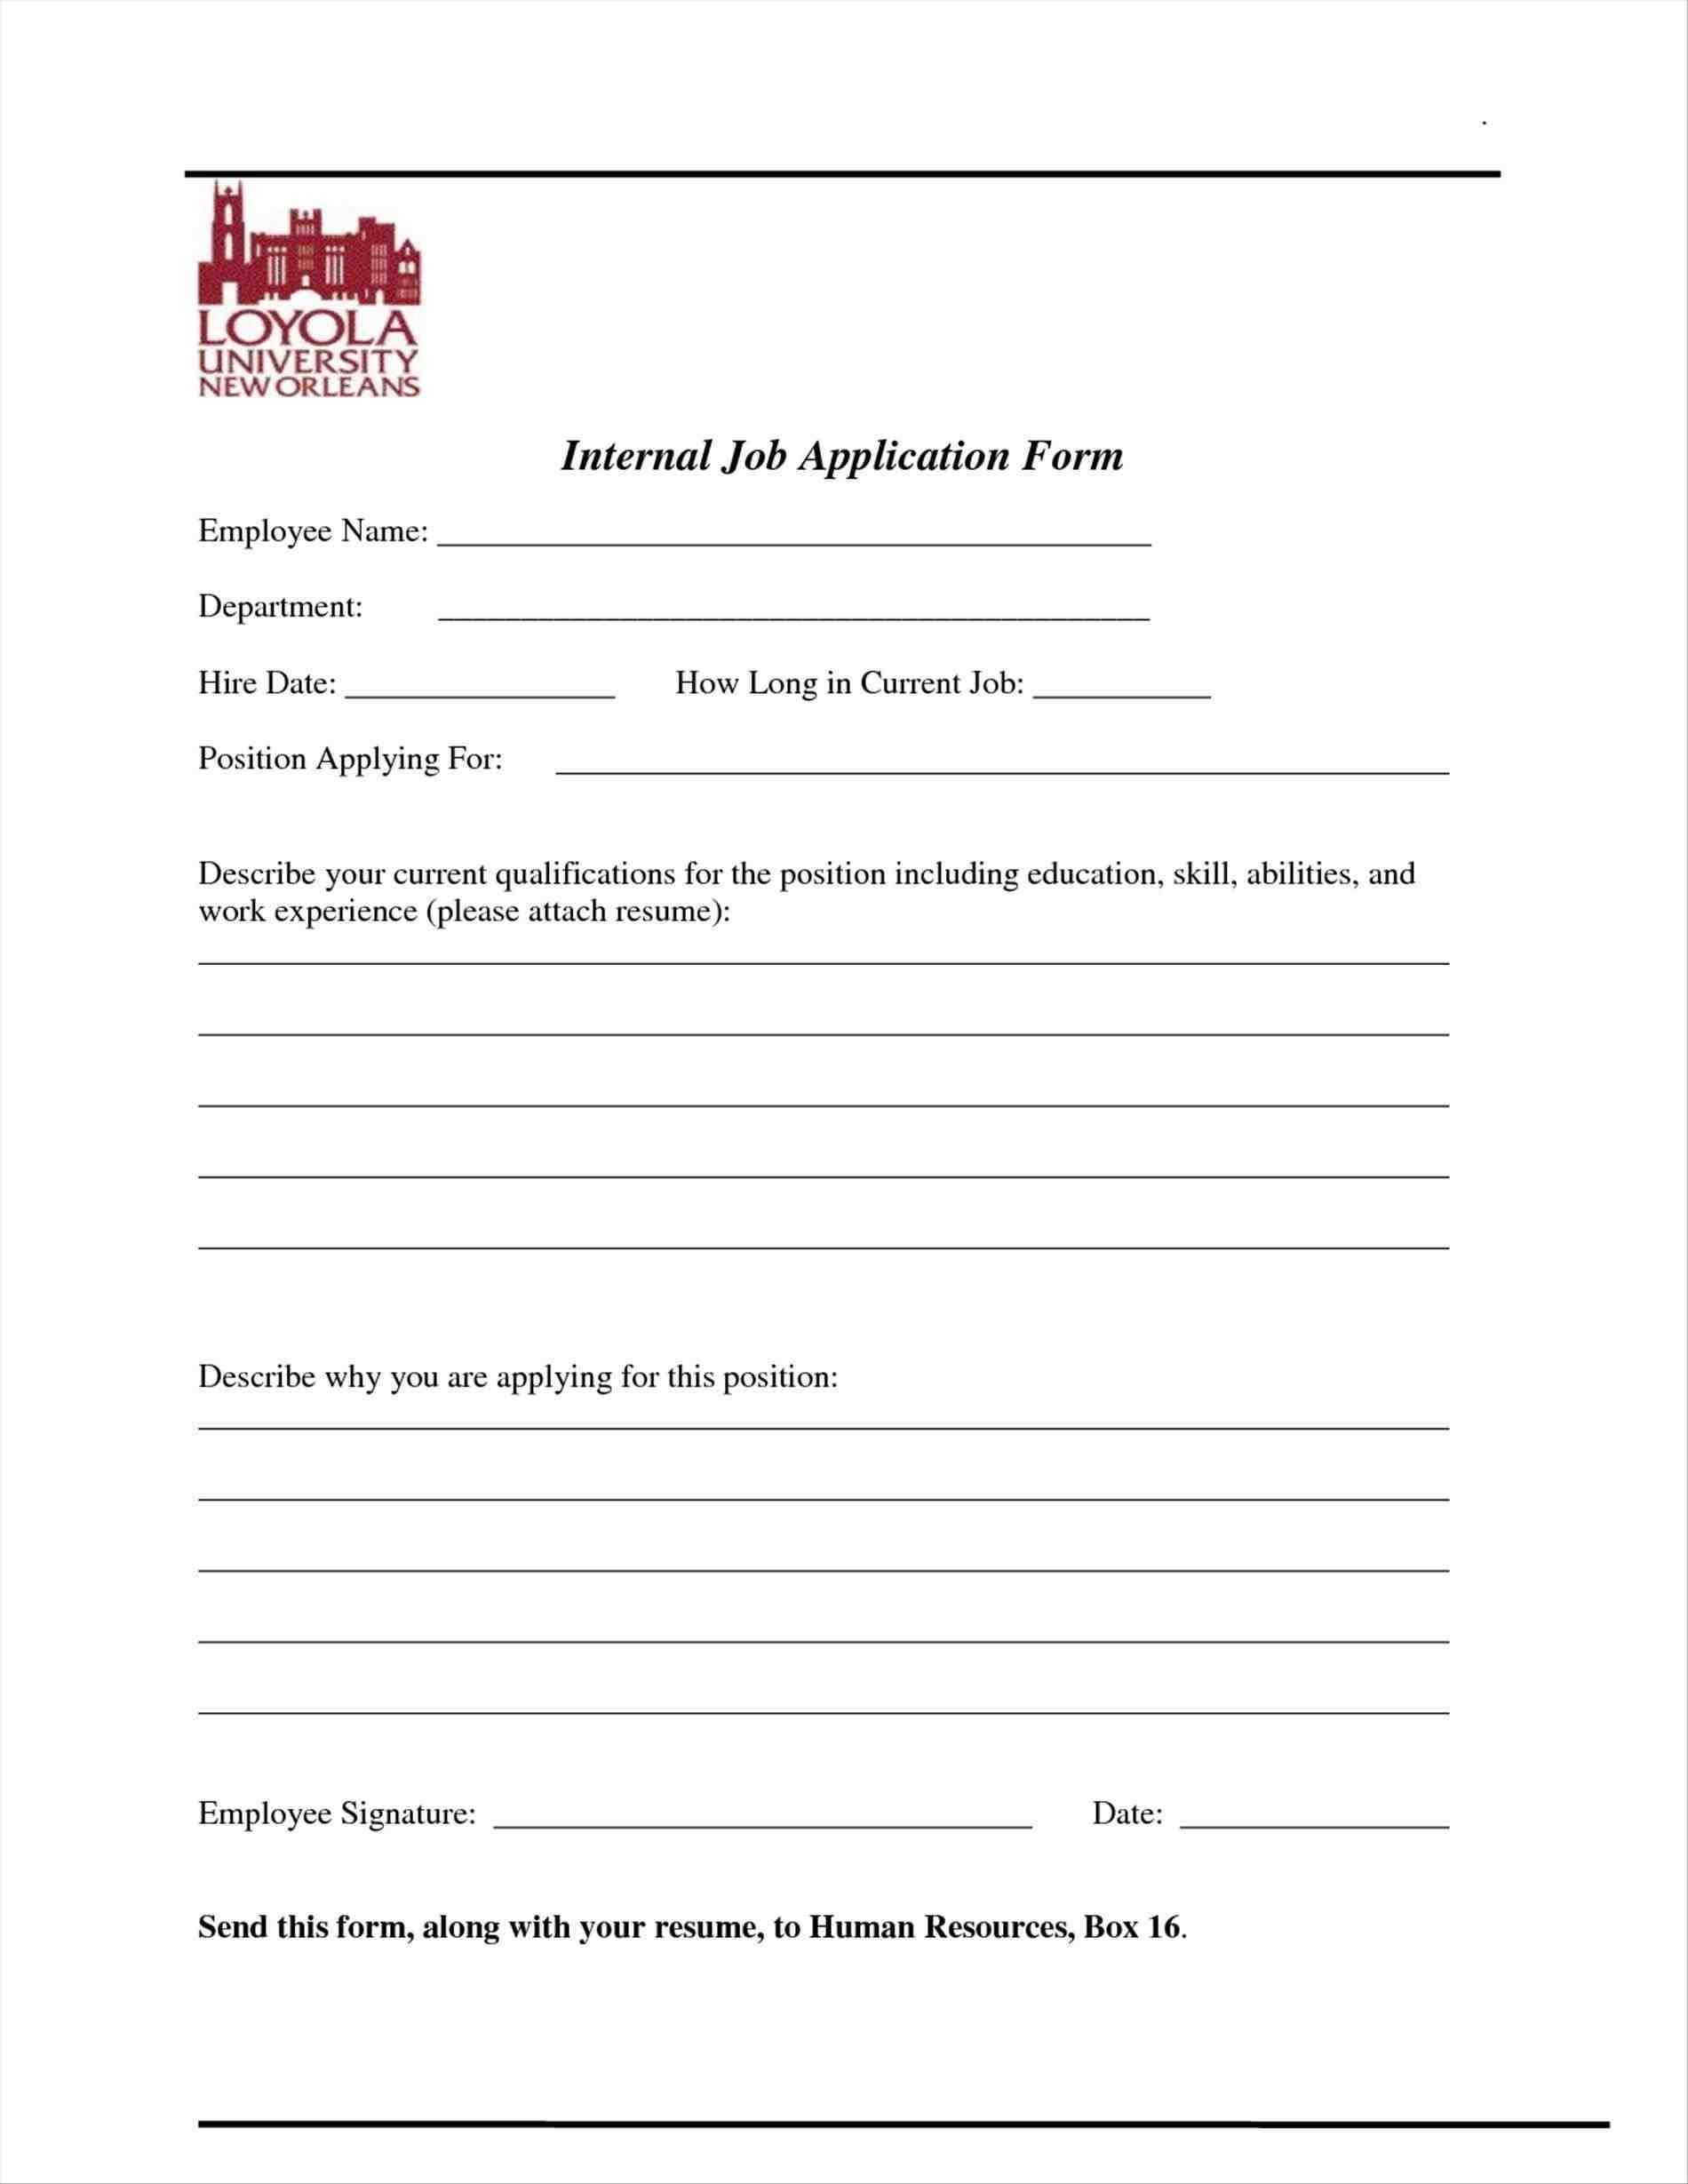 Internal Job Application Form Template Write Happy Ending Within Job Application Template Word Document